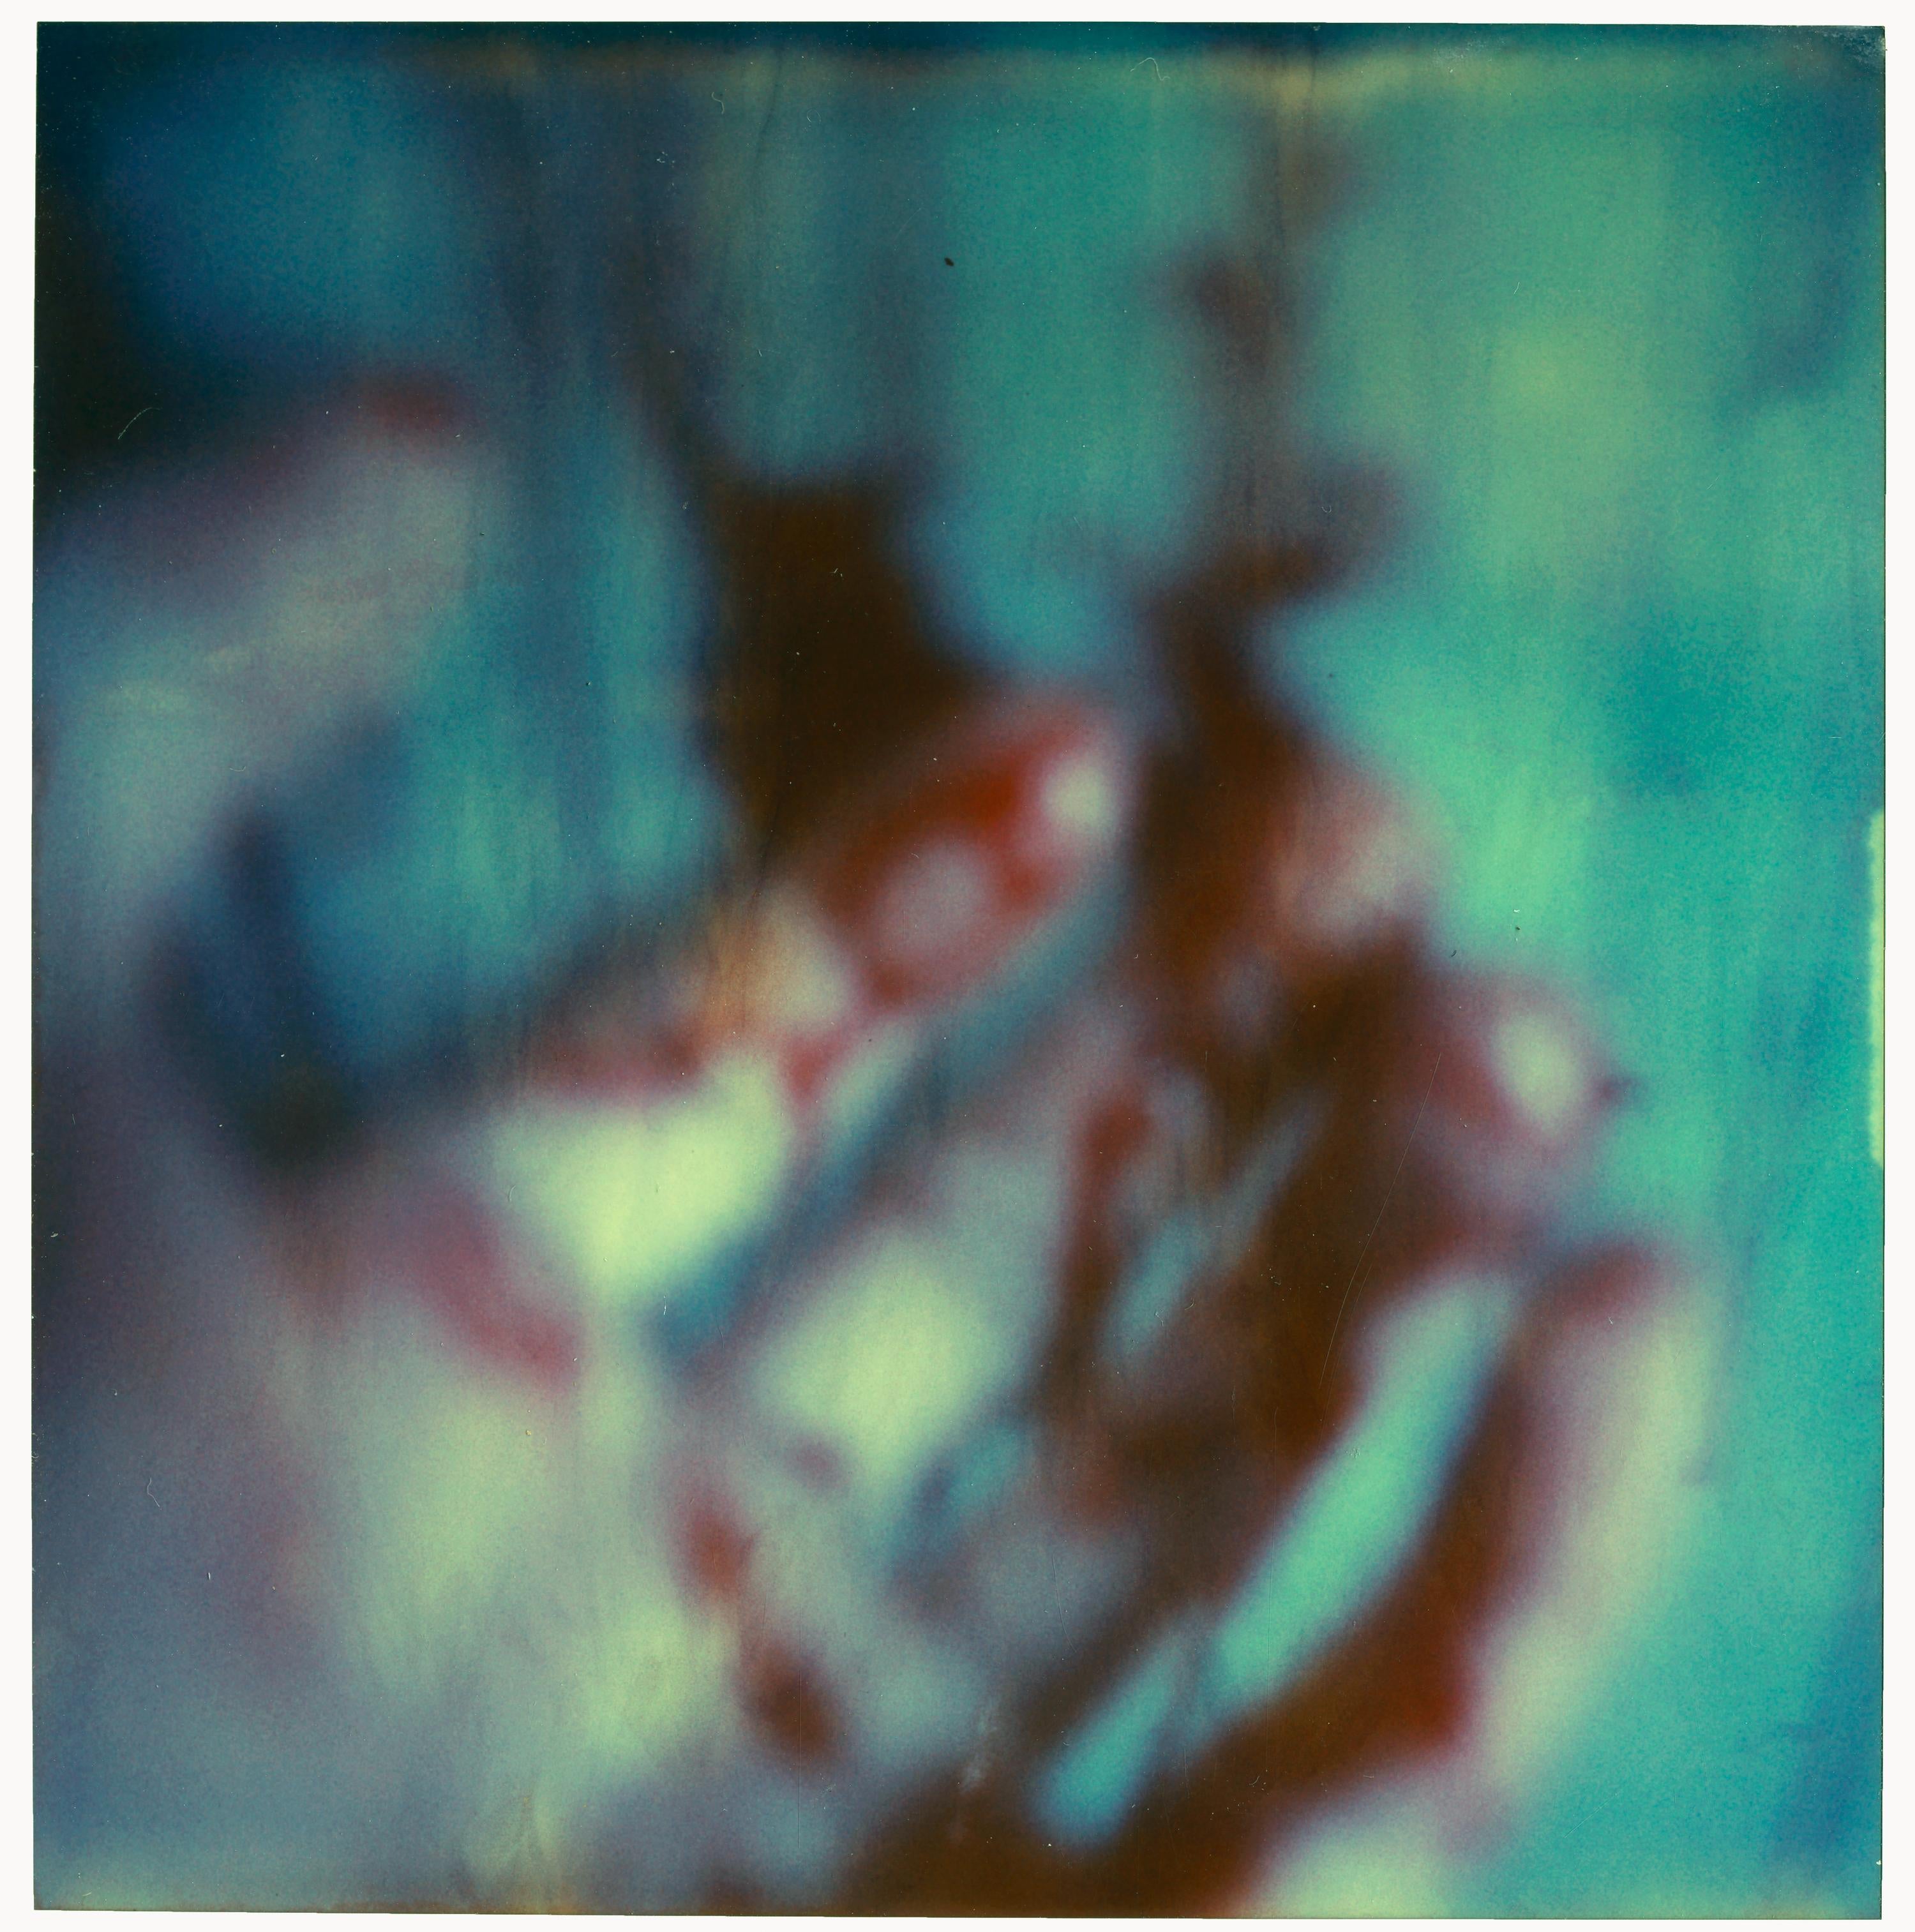 Abstract Photograph Stefanie Schneider - Mindscreen 02 - Contemporain, 21e siècle, Polaroïd, Abstrait